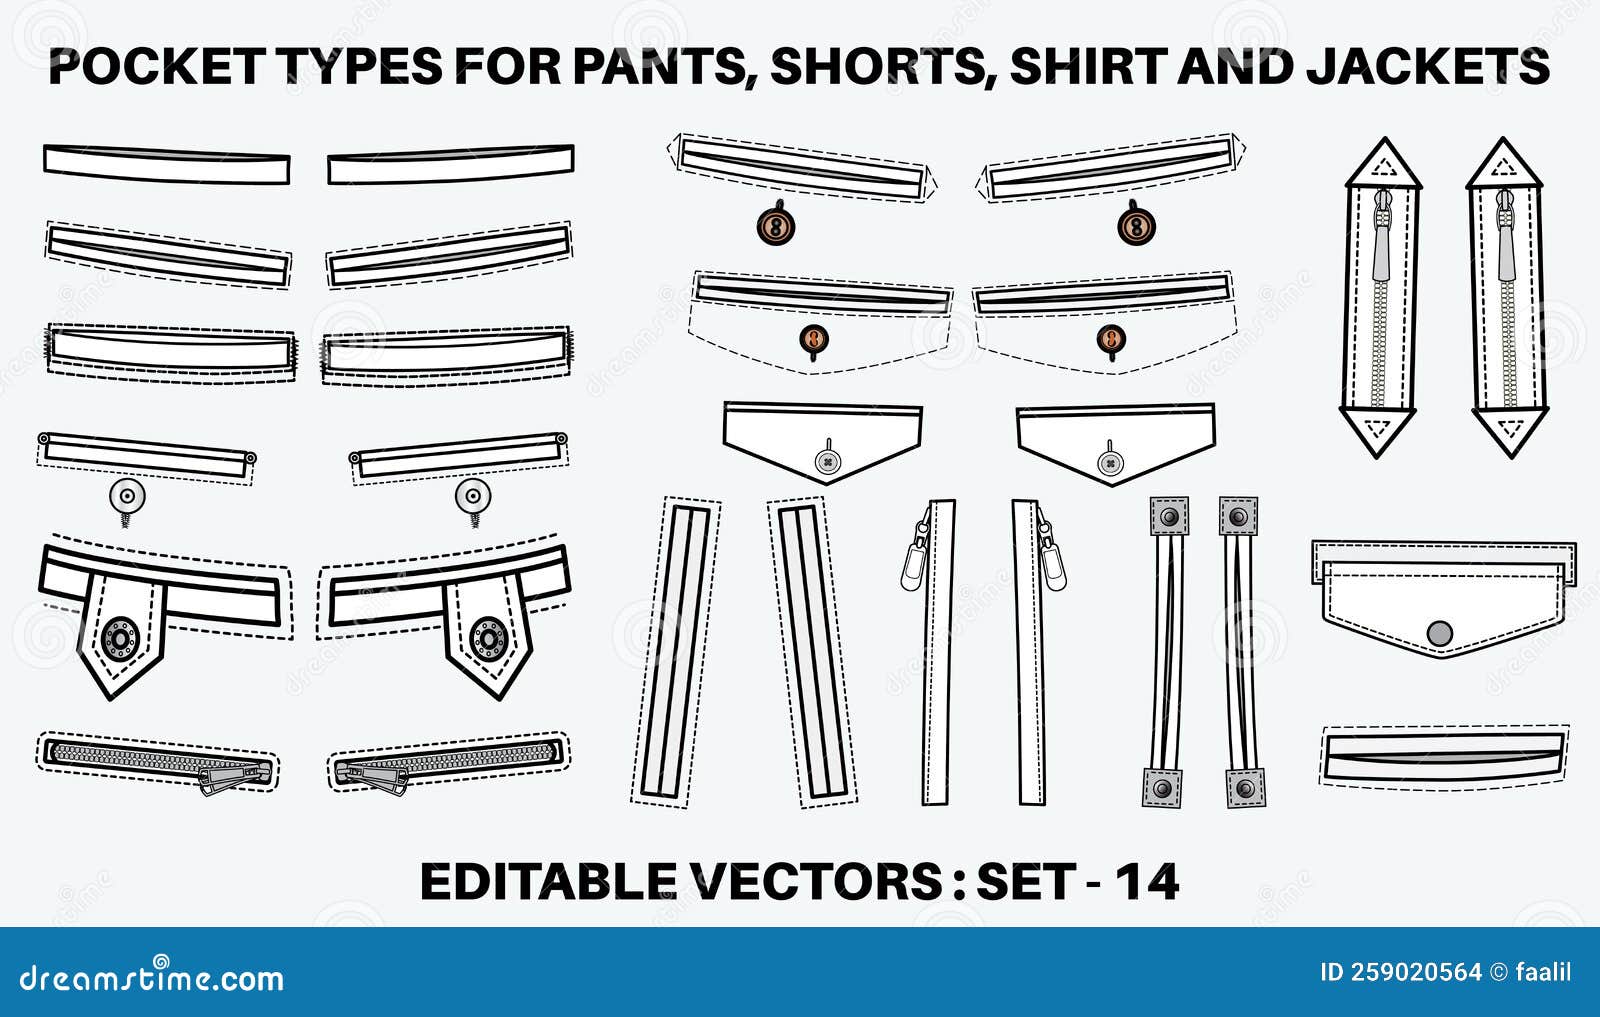 welt and jetted trouser pocket flat sketch   set, different types of clothing pockets for jeans pocket, denim,